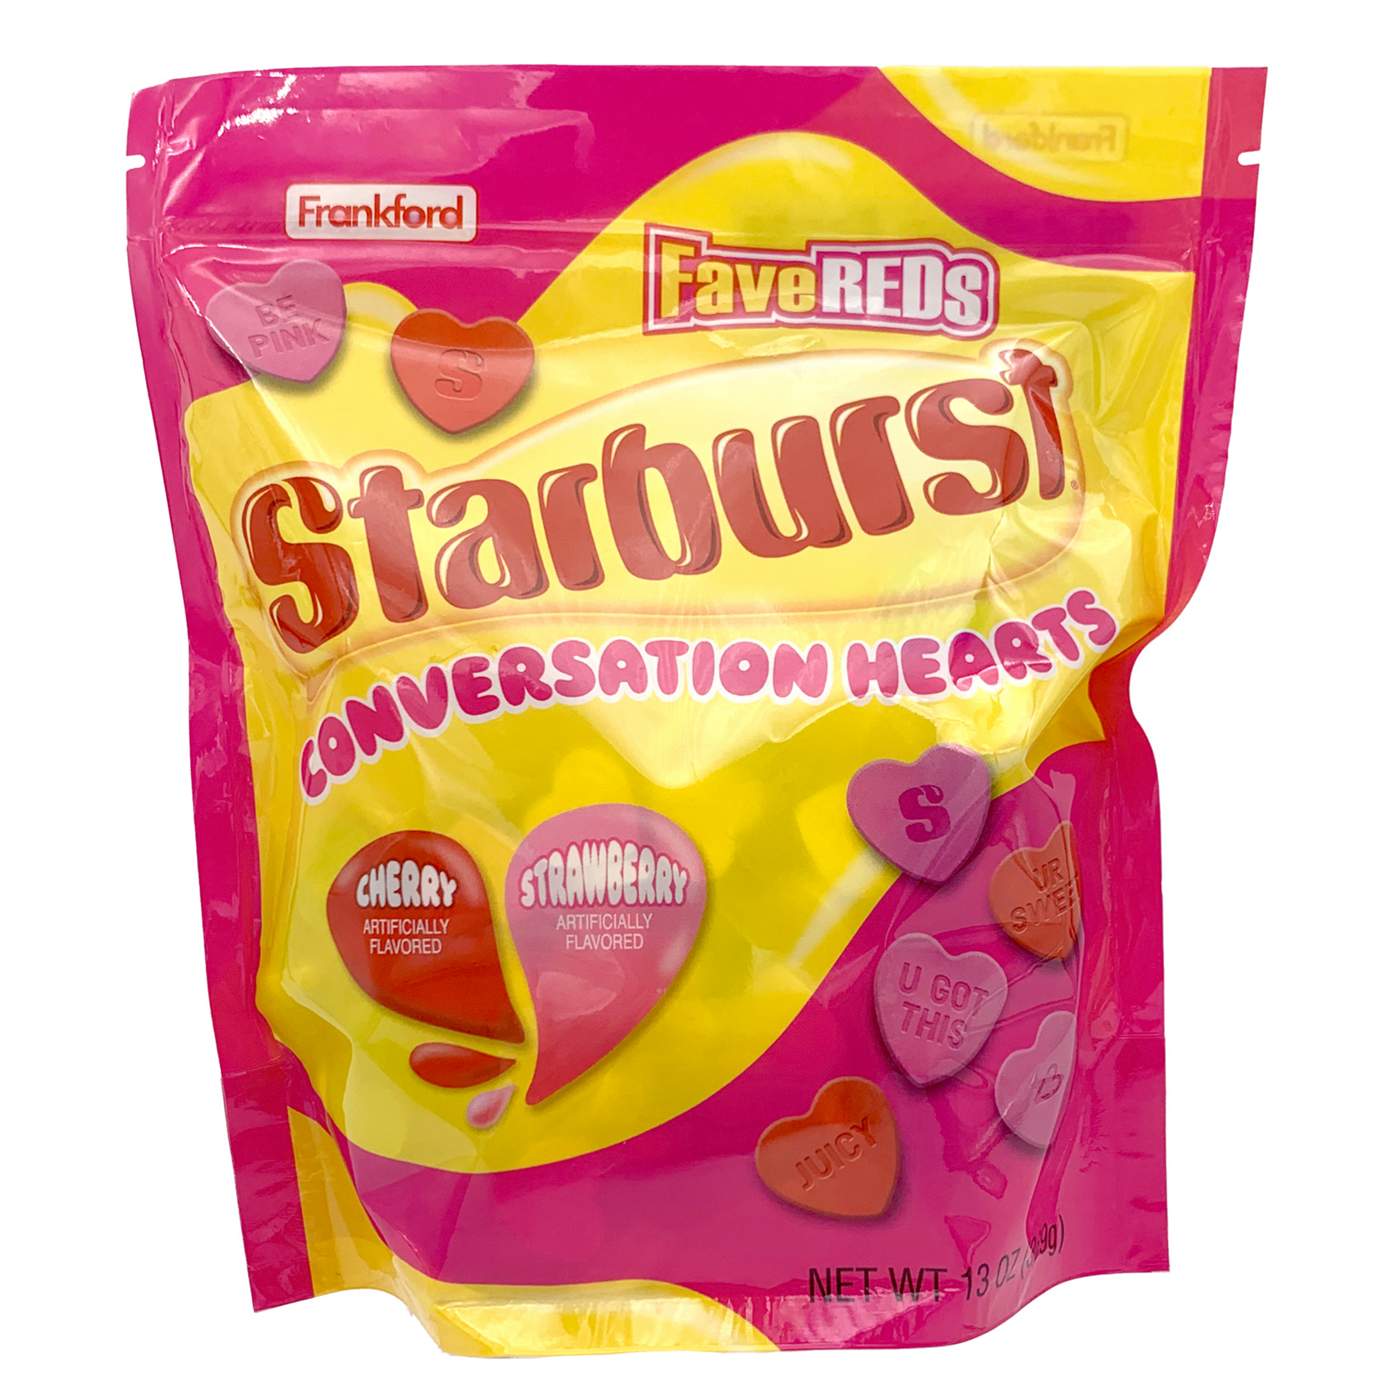 Frankford Starburst FaveReds Conversation Hearts Valentine's Candy; image 1 of 2